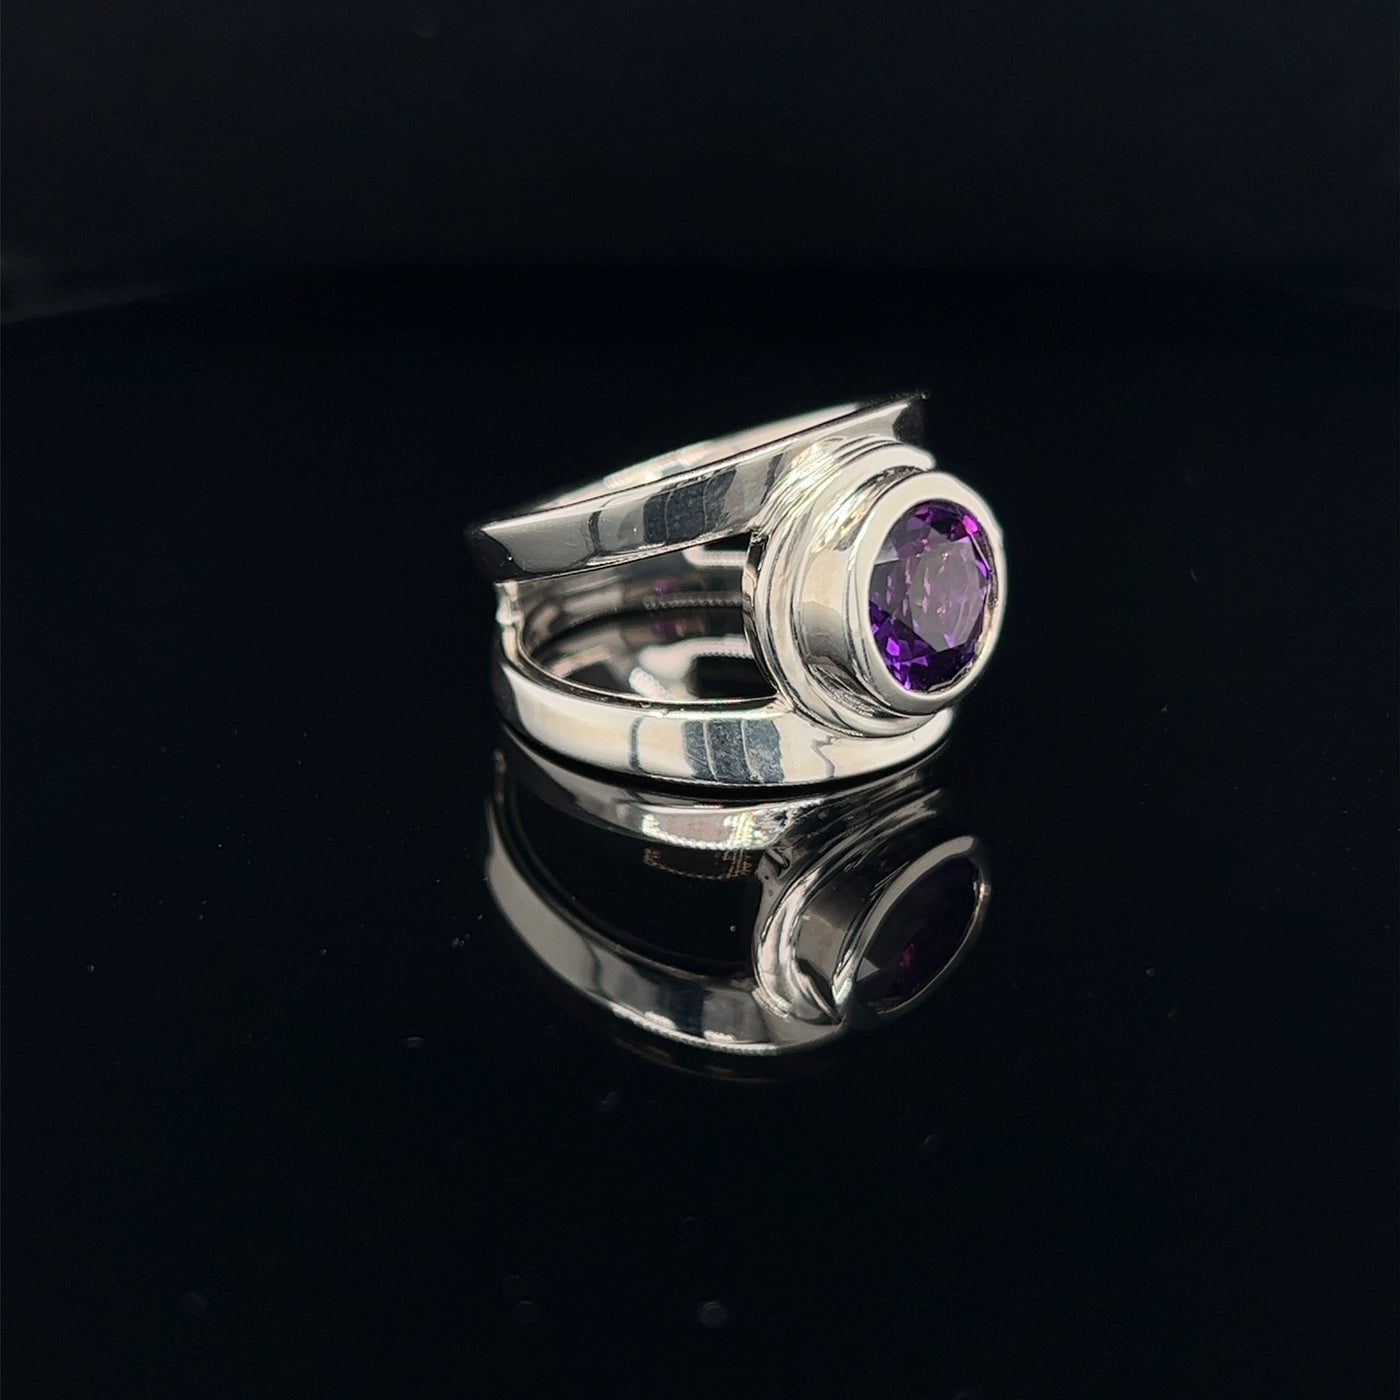 Sierra Moon Signature 'Half-Pipe Halo' Ring